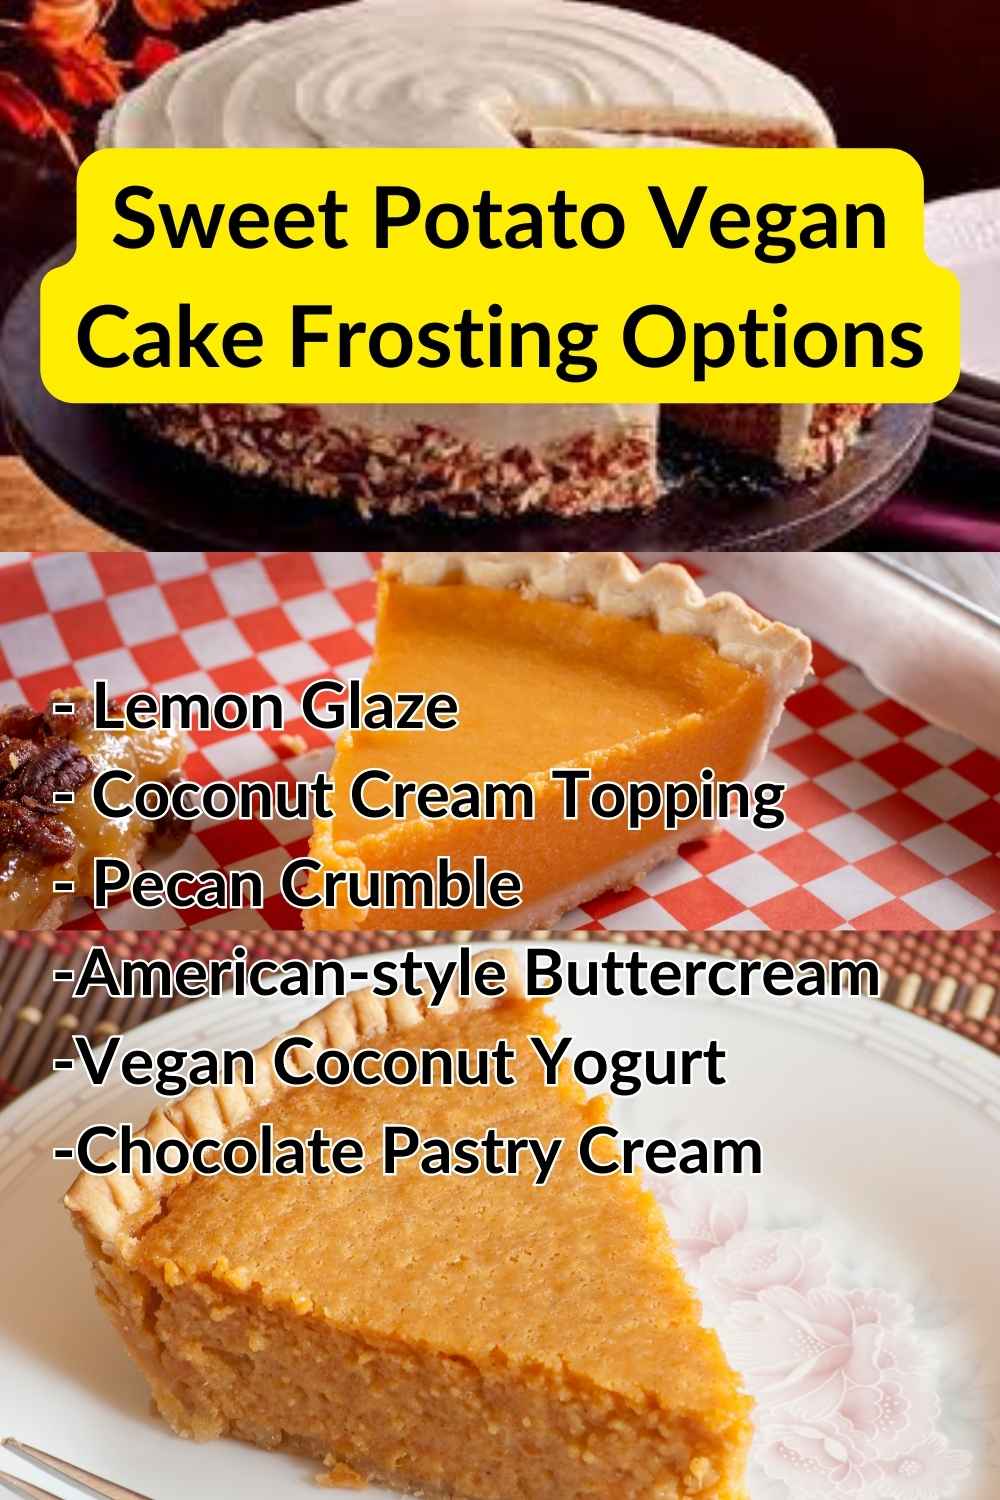 Sweet potato cake frosting options